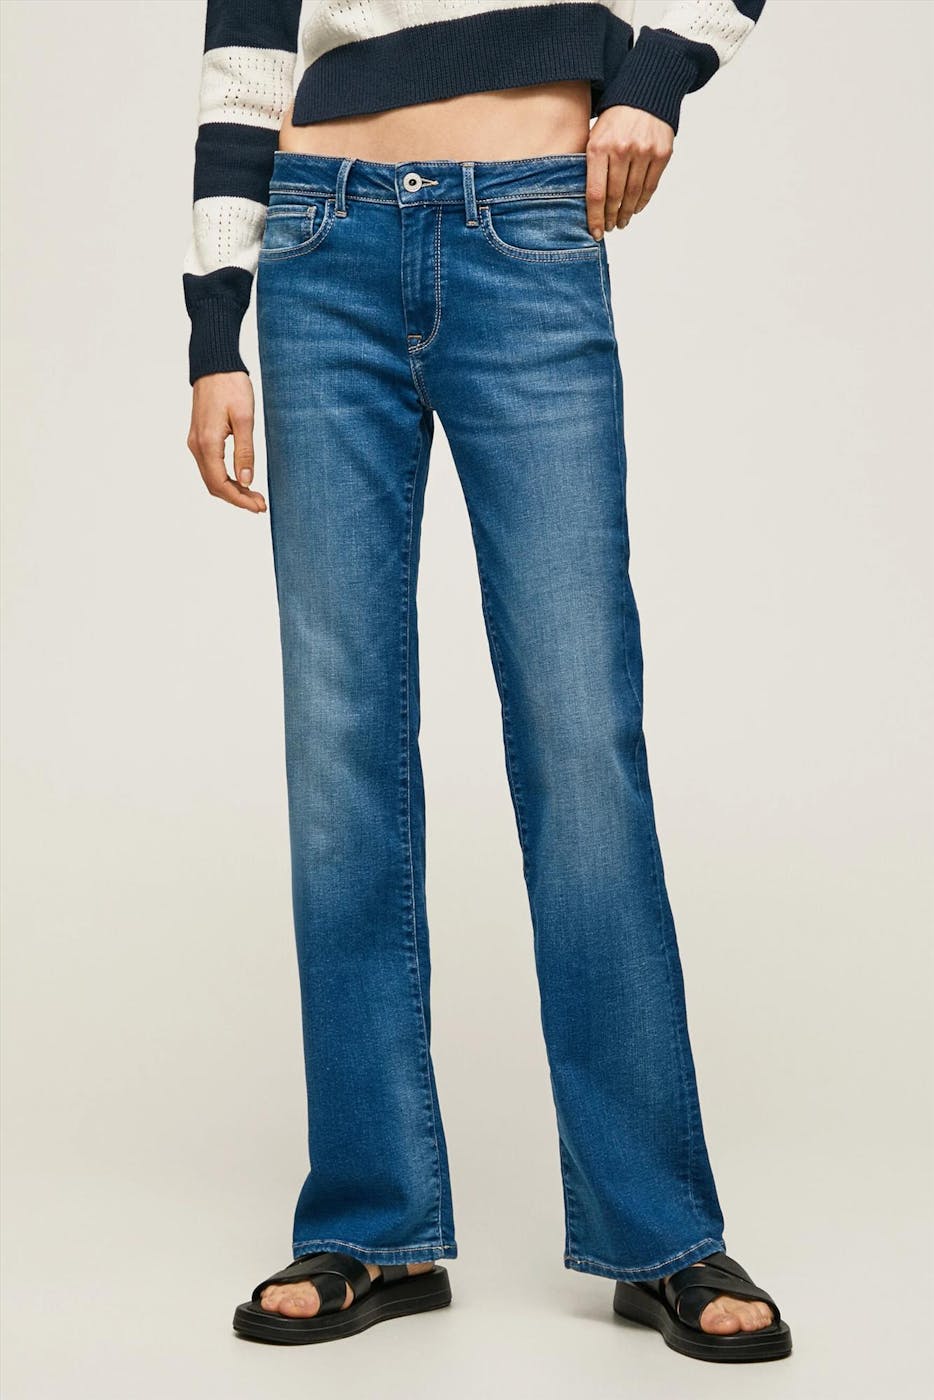 Pepe Jeans London - Blauwe Aubrey jeans